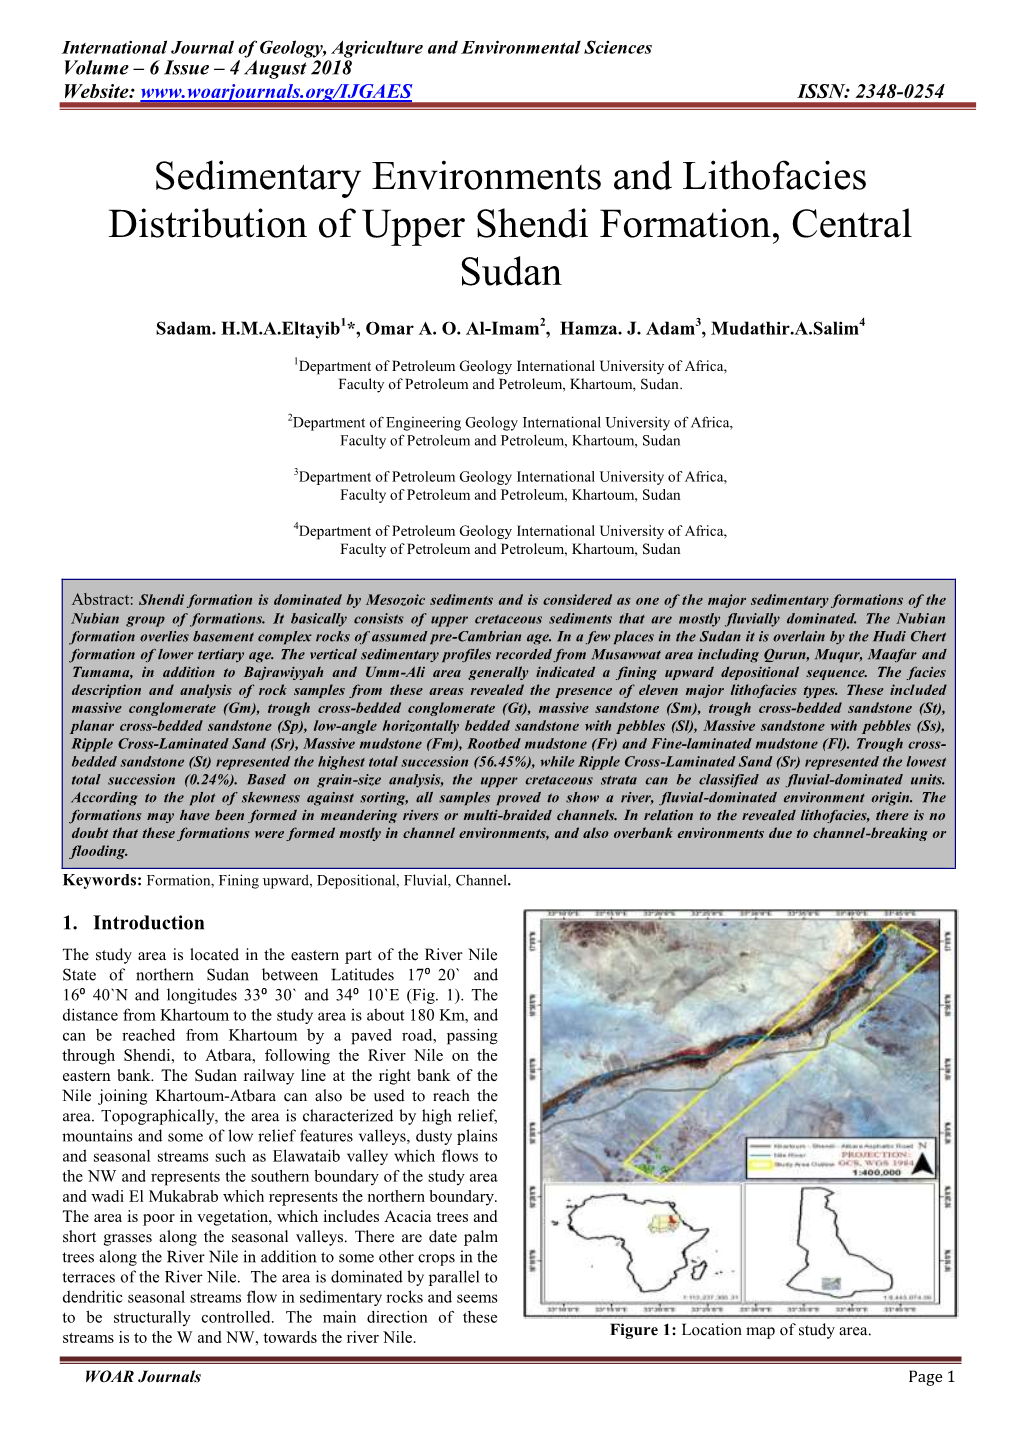 Sedimentary Environments and Lithofacies Distribution of Upper Shendi Formation, Central Sudan